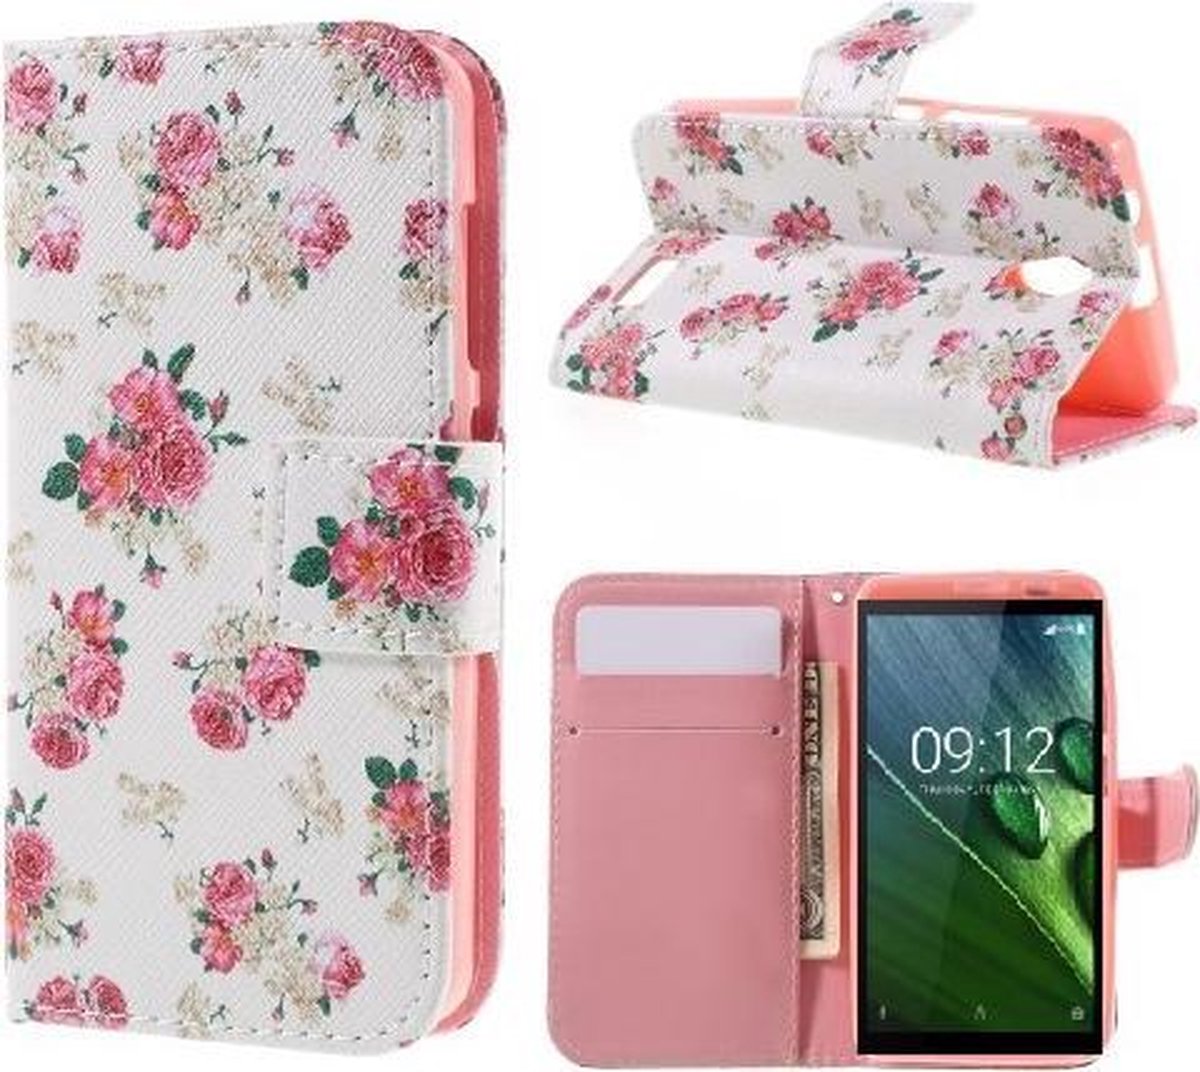 Qissy Elegant Flowers portemonnee case hoesje voor Nokia 5